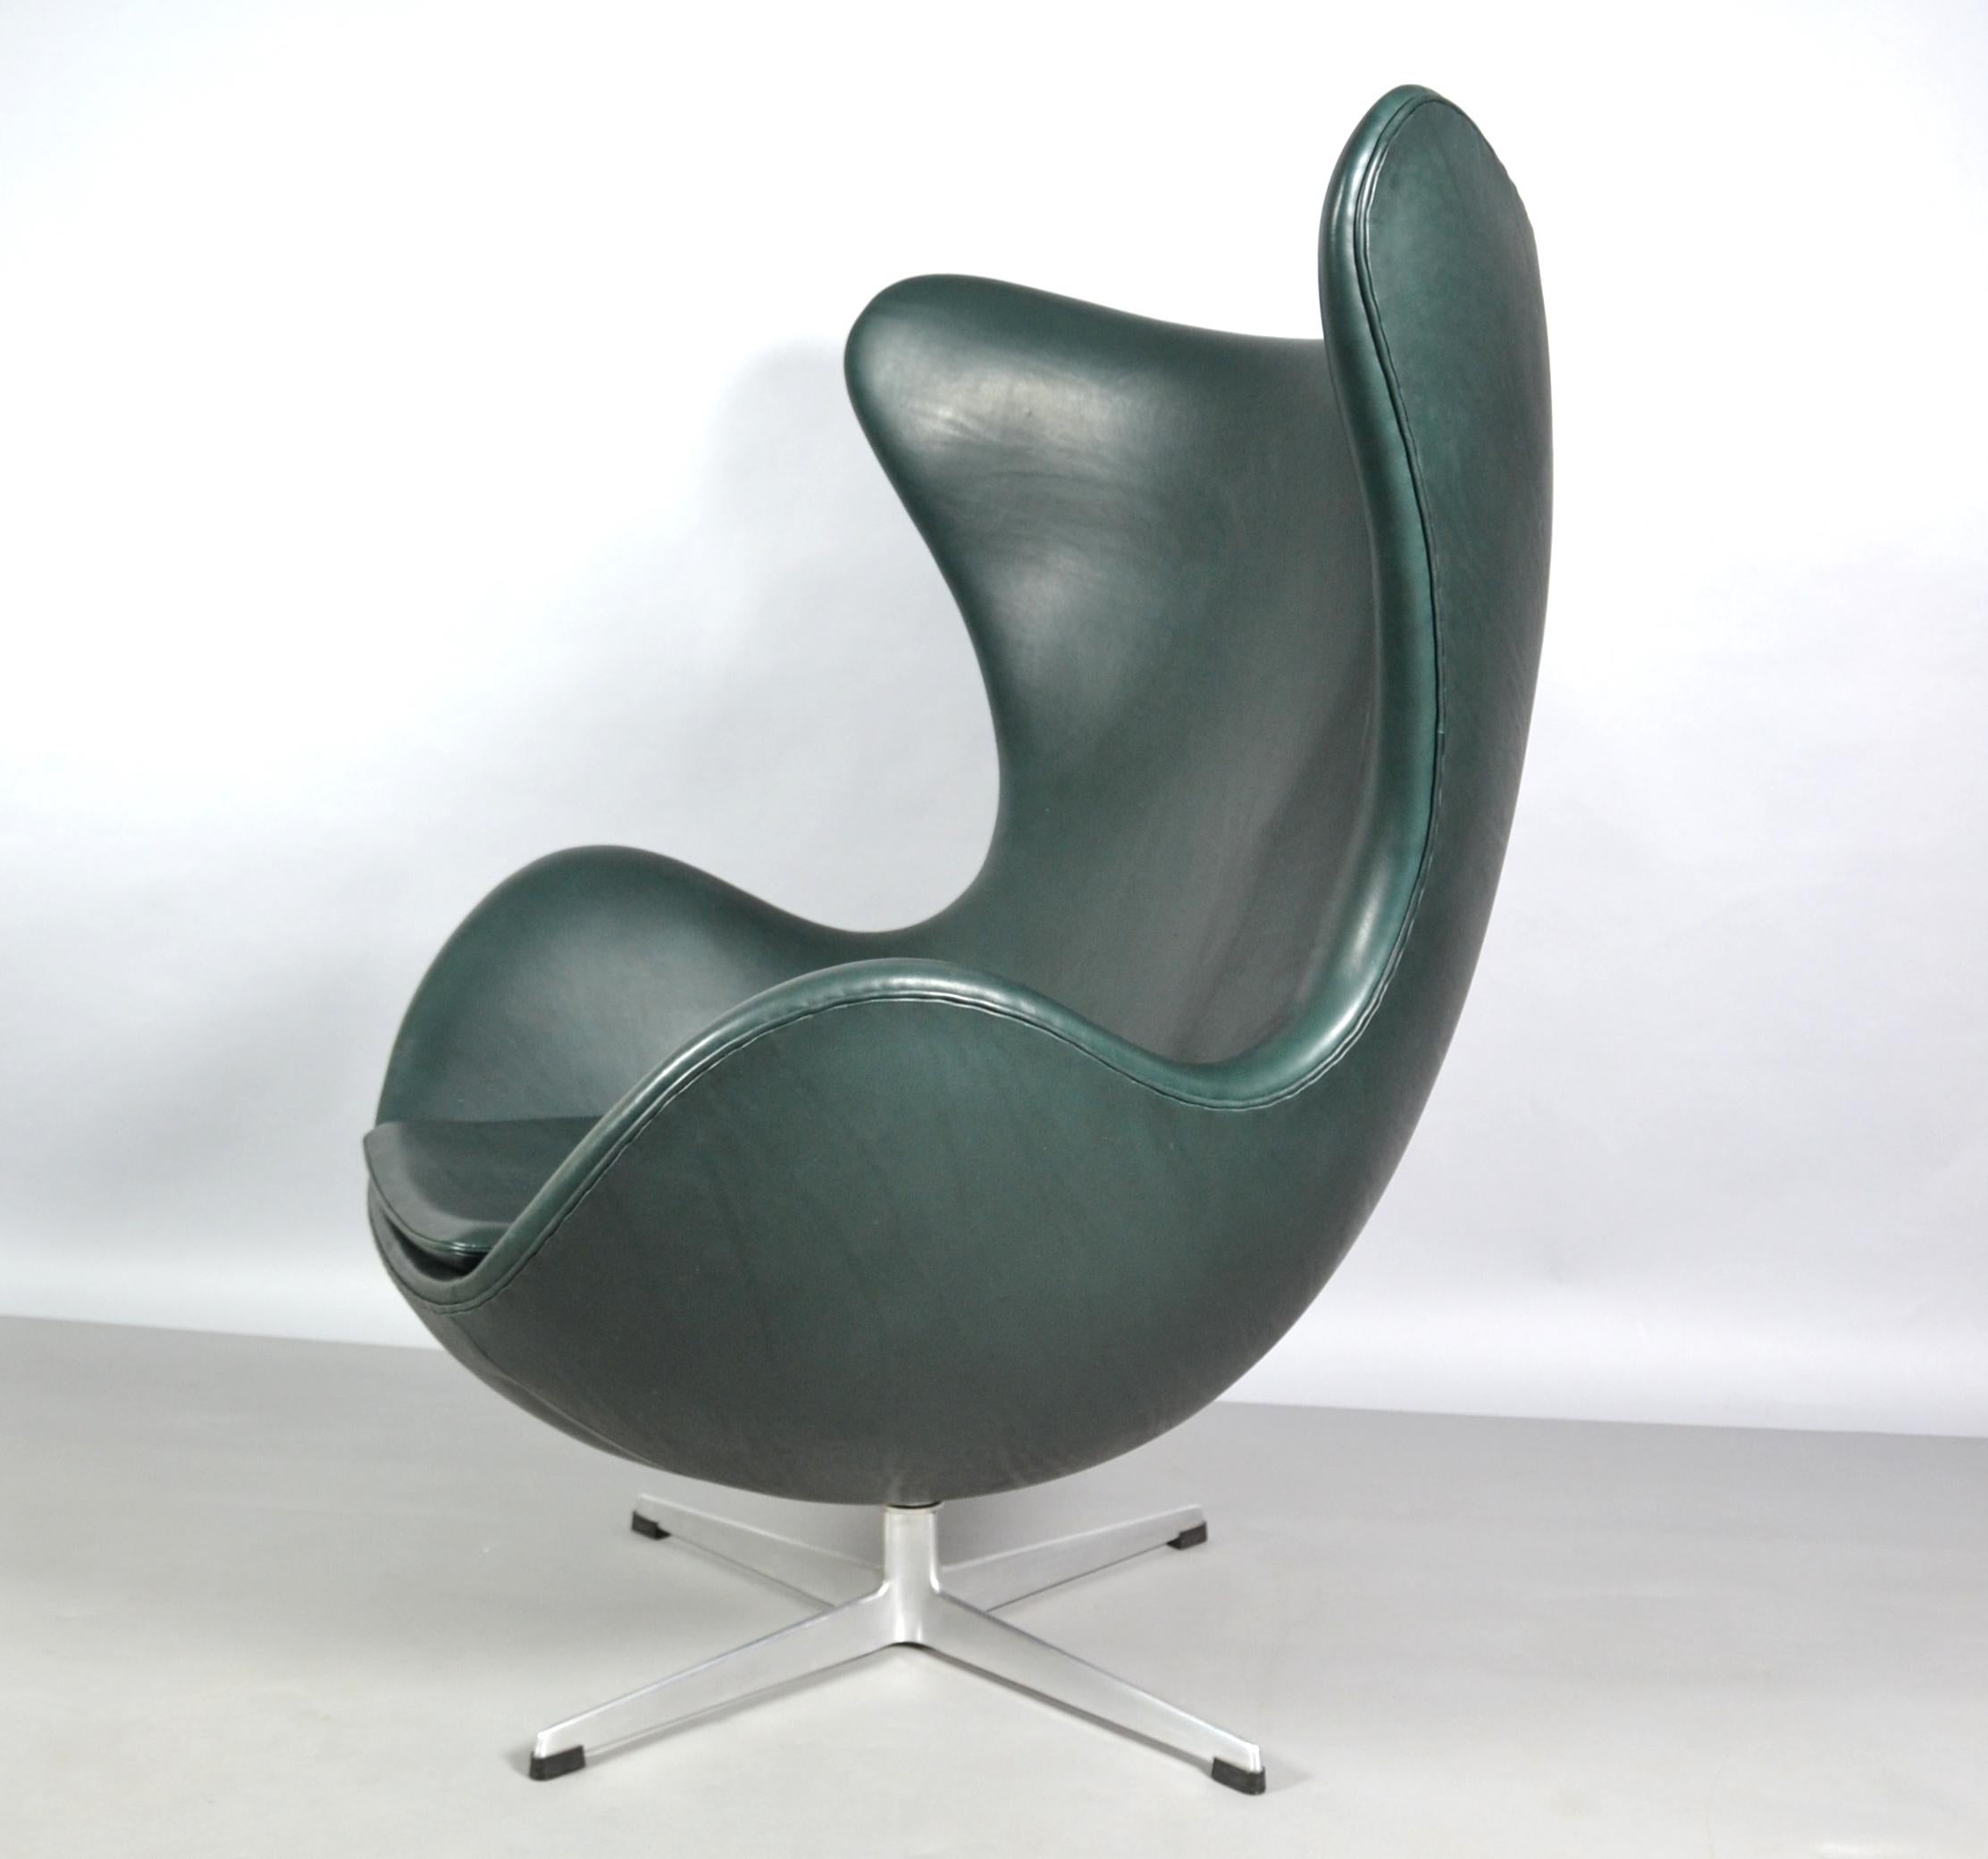 Danish Leather Egg Chair by Arne Jacobsen for Fritz Hansen, 1970s New Green Leather